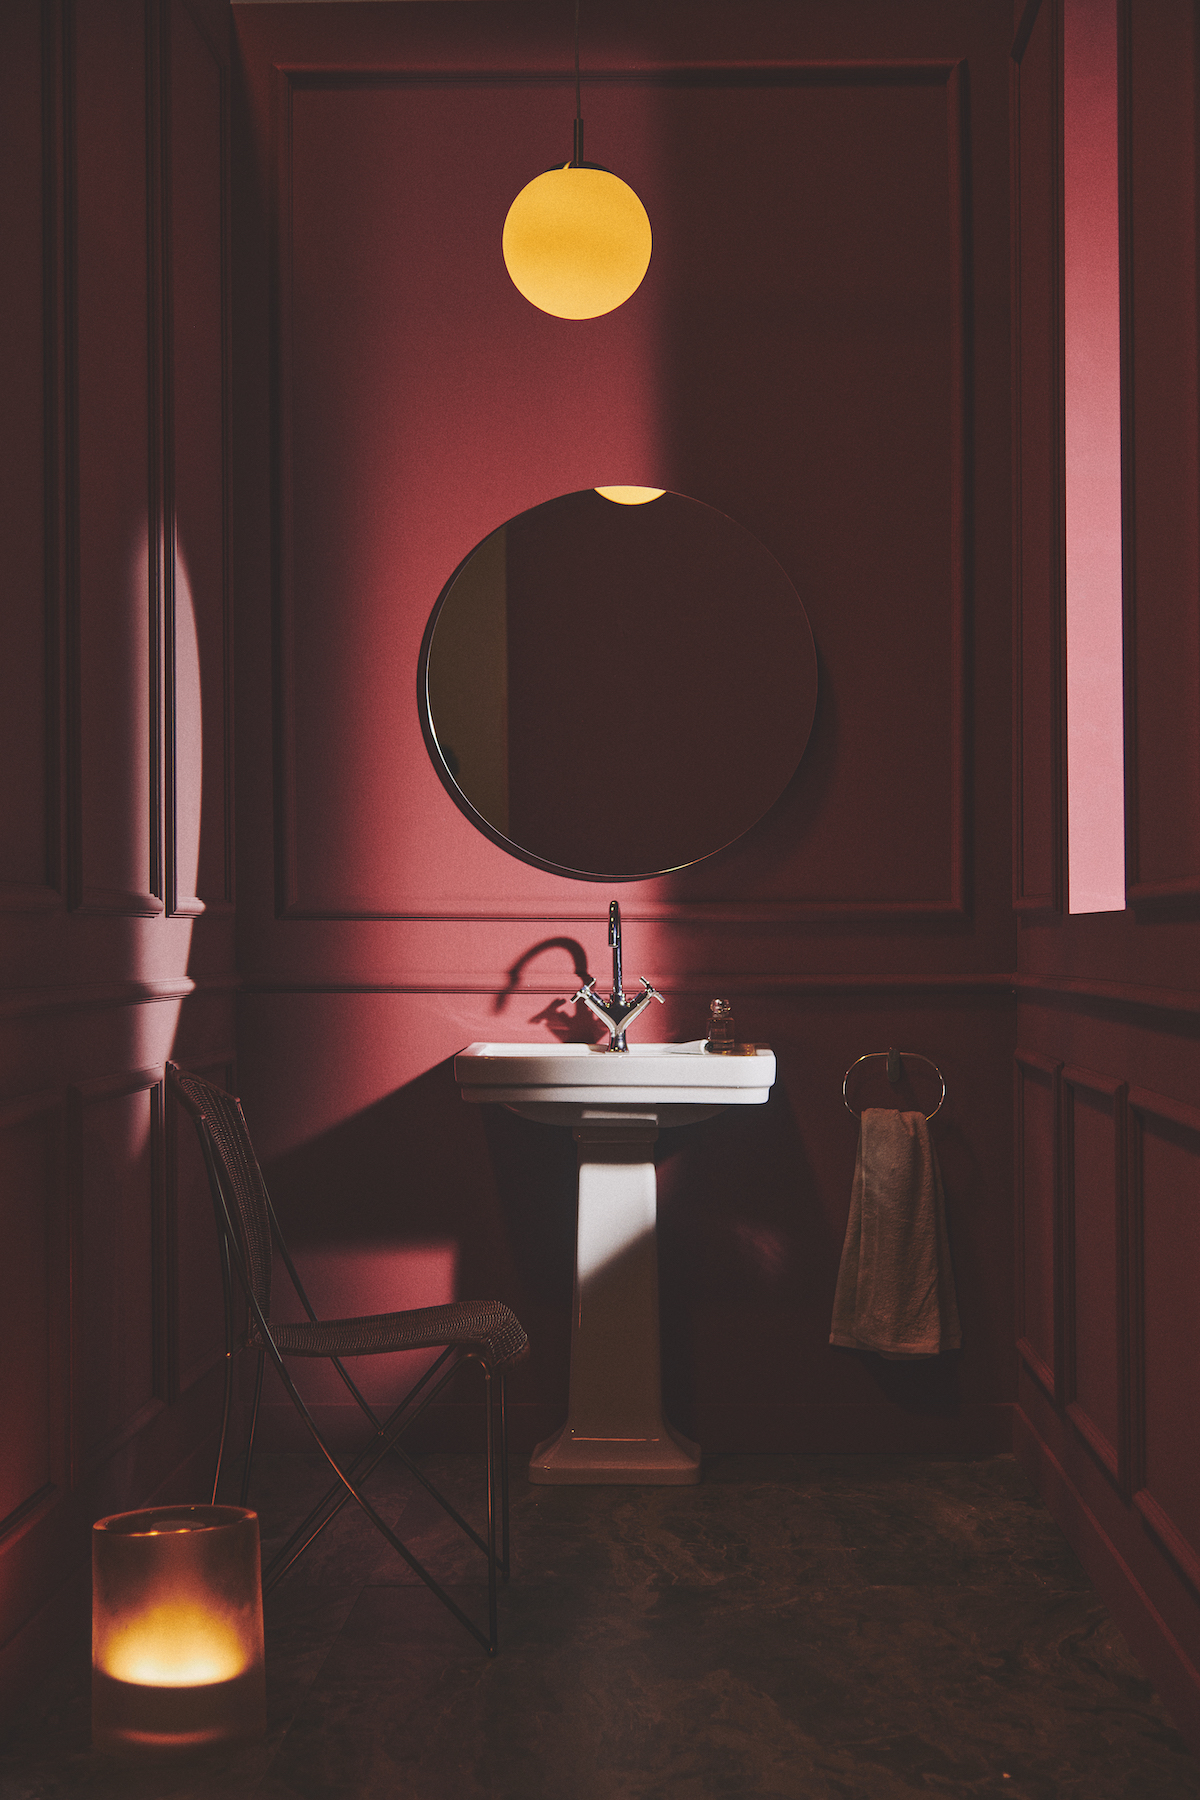 A dark red bathroom with white basin